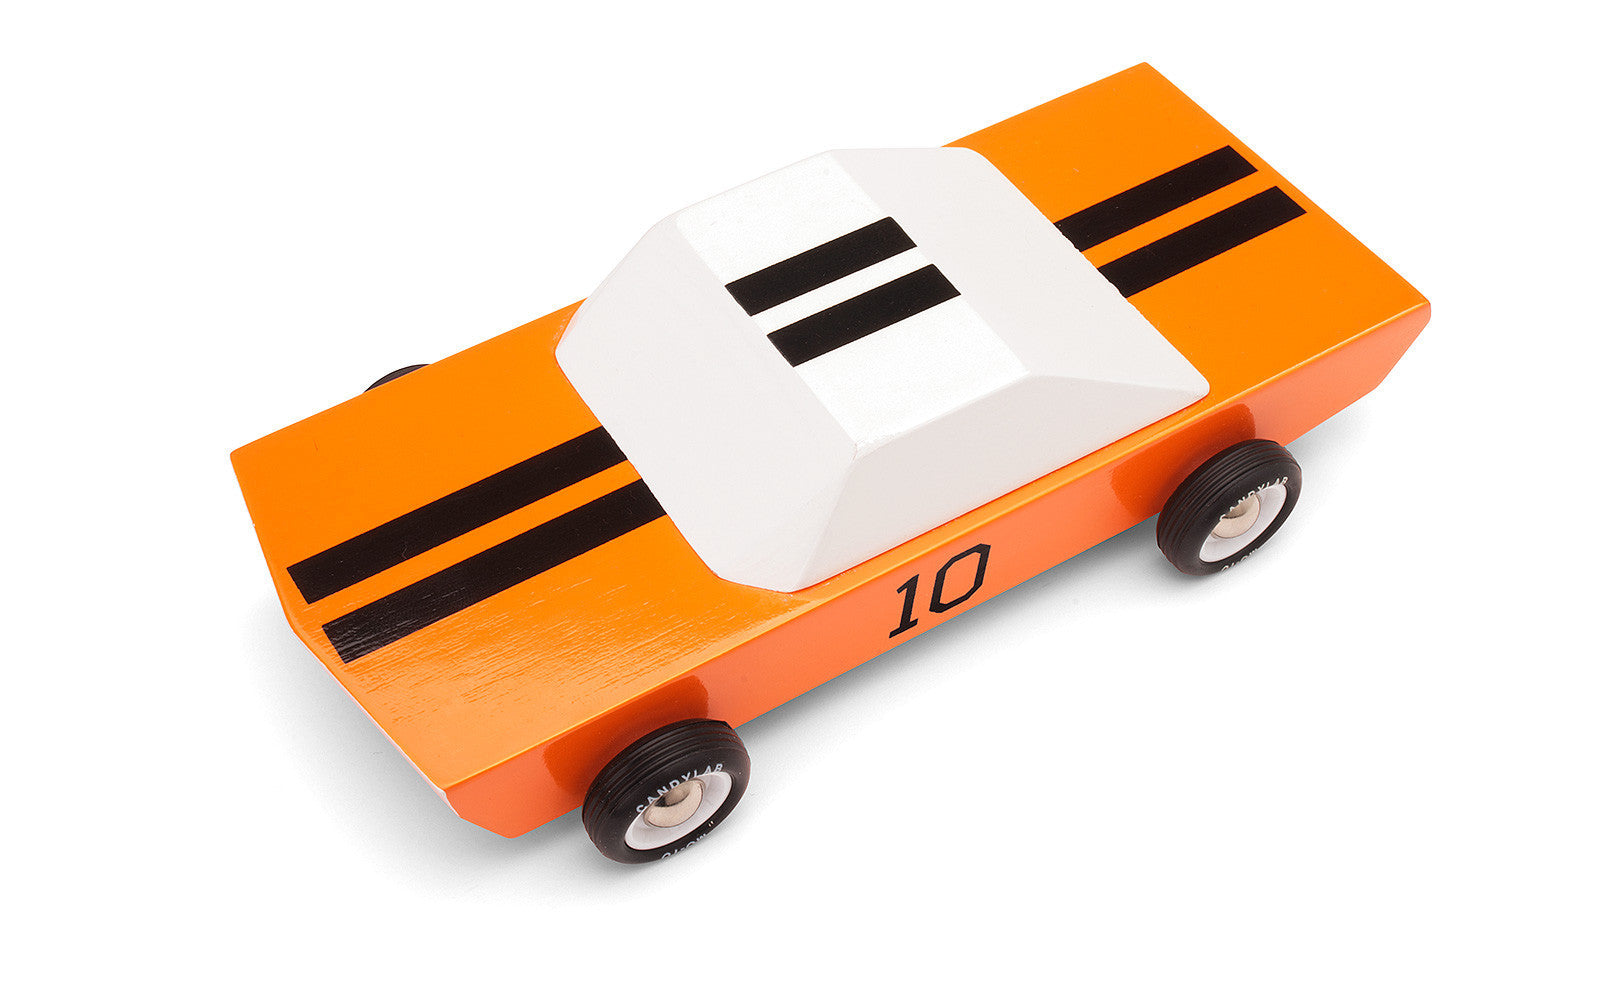 Orange Racer GT-10